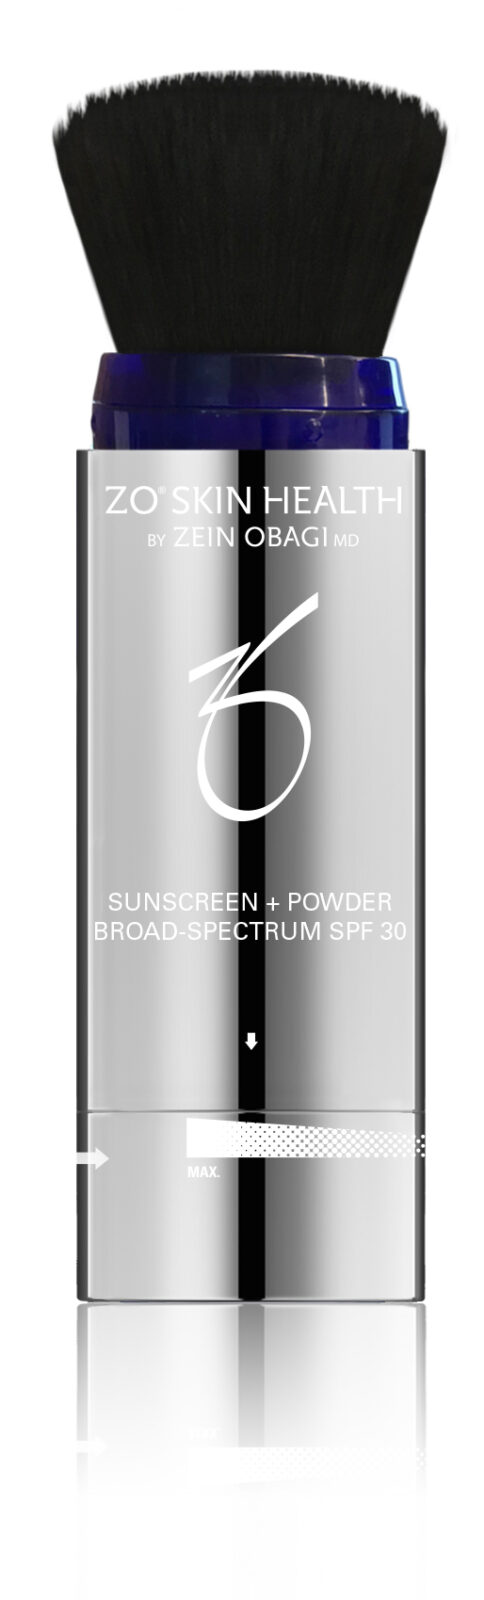 Sunscreen Powder Opened - Reflection